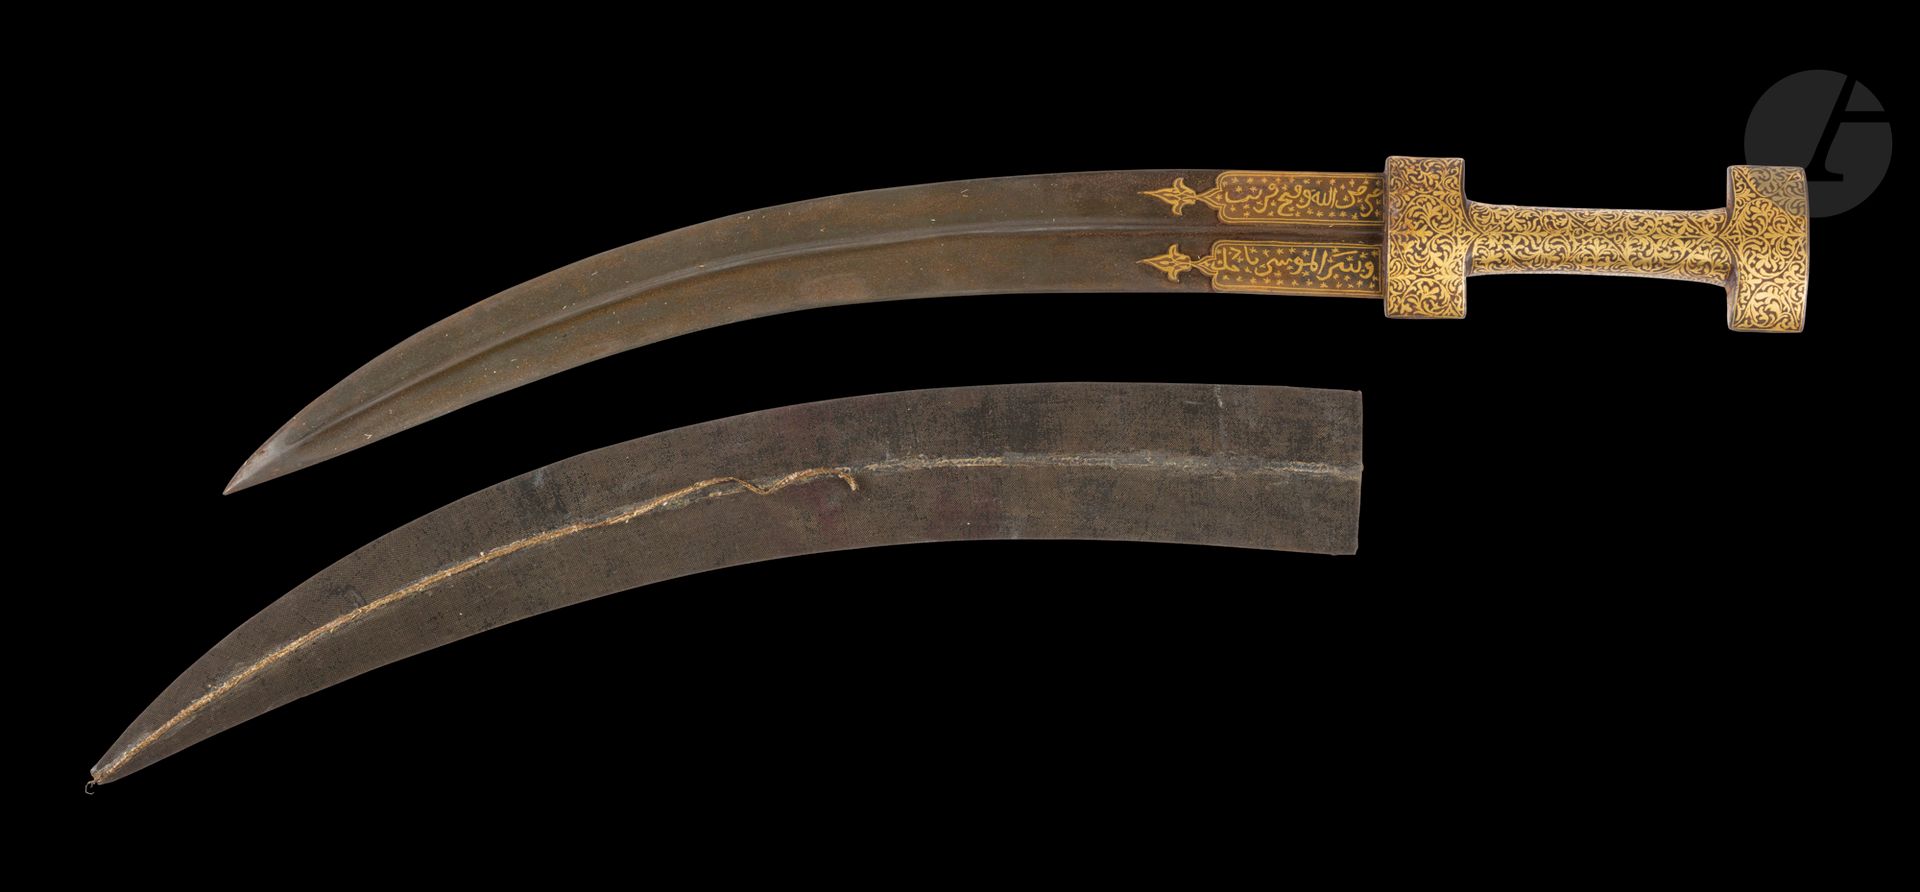 Null Jambiyya匕首，奥斯曼帝国，19世纪初
弯曲的钢刀，中心为双刃，刀跟两面嵌有黄金，一面描绘了两个饰有棕榈卷轴的花纹图案，另一面是星空背景的书法，&hellip;